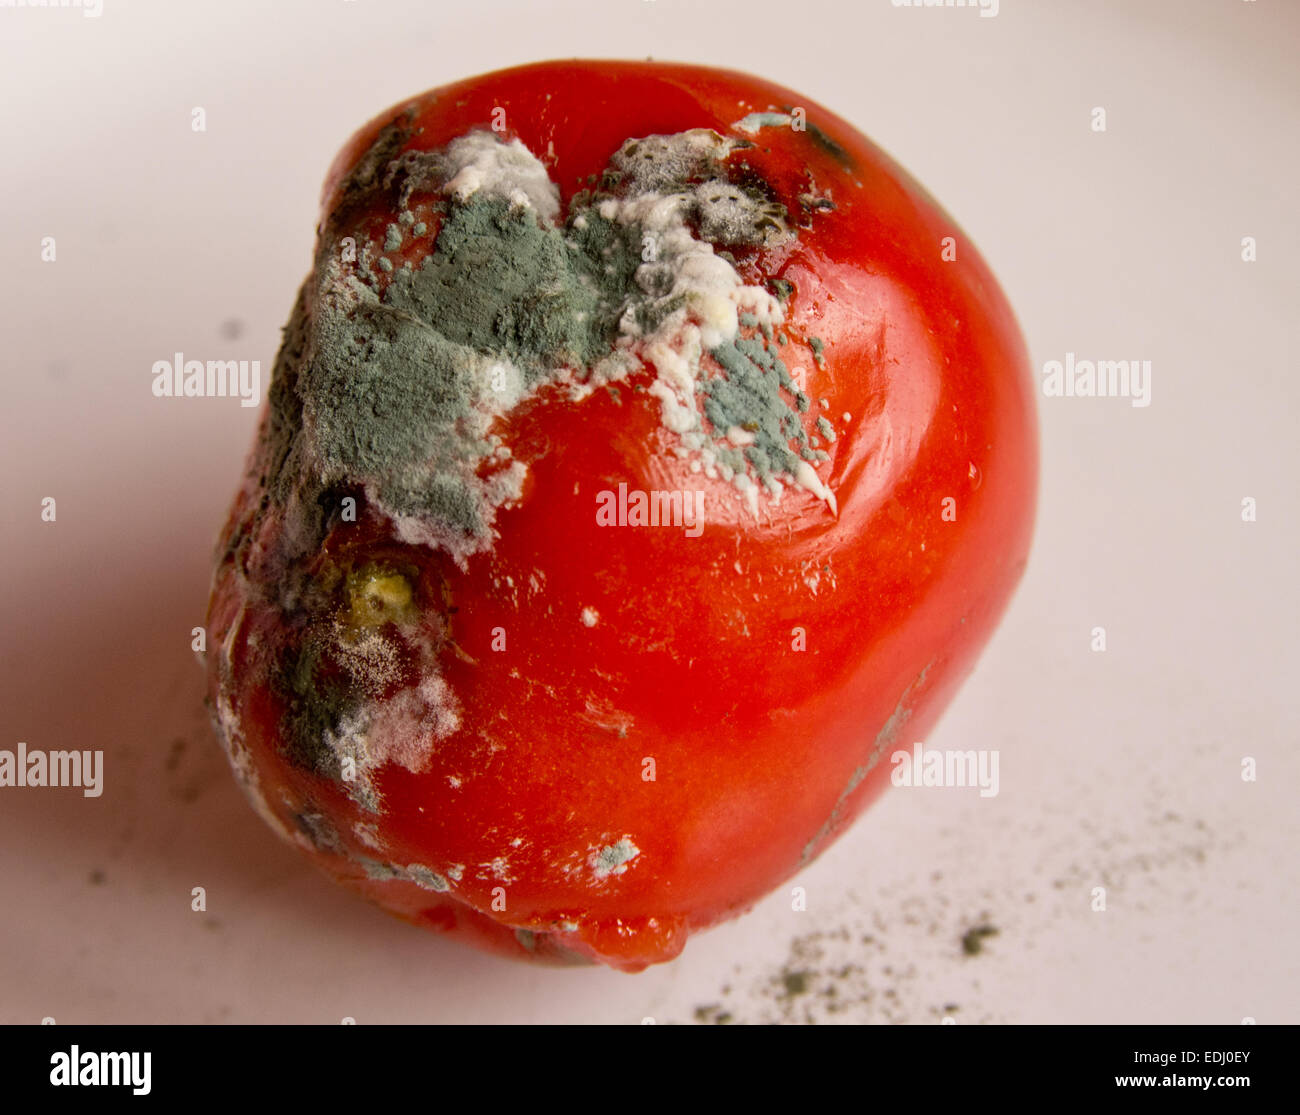 https://c8.alamy.com/comp/EDJ0EY/rotten-tomato-EDJ0EY.jpg